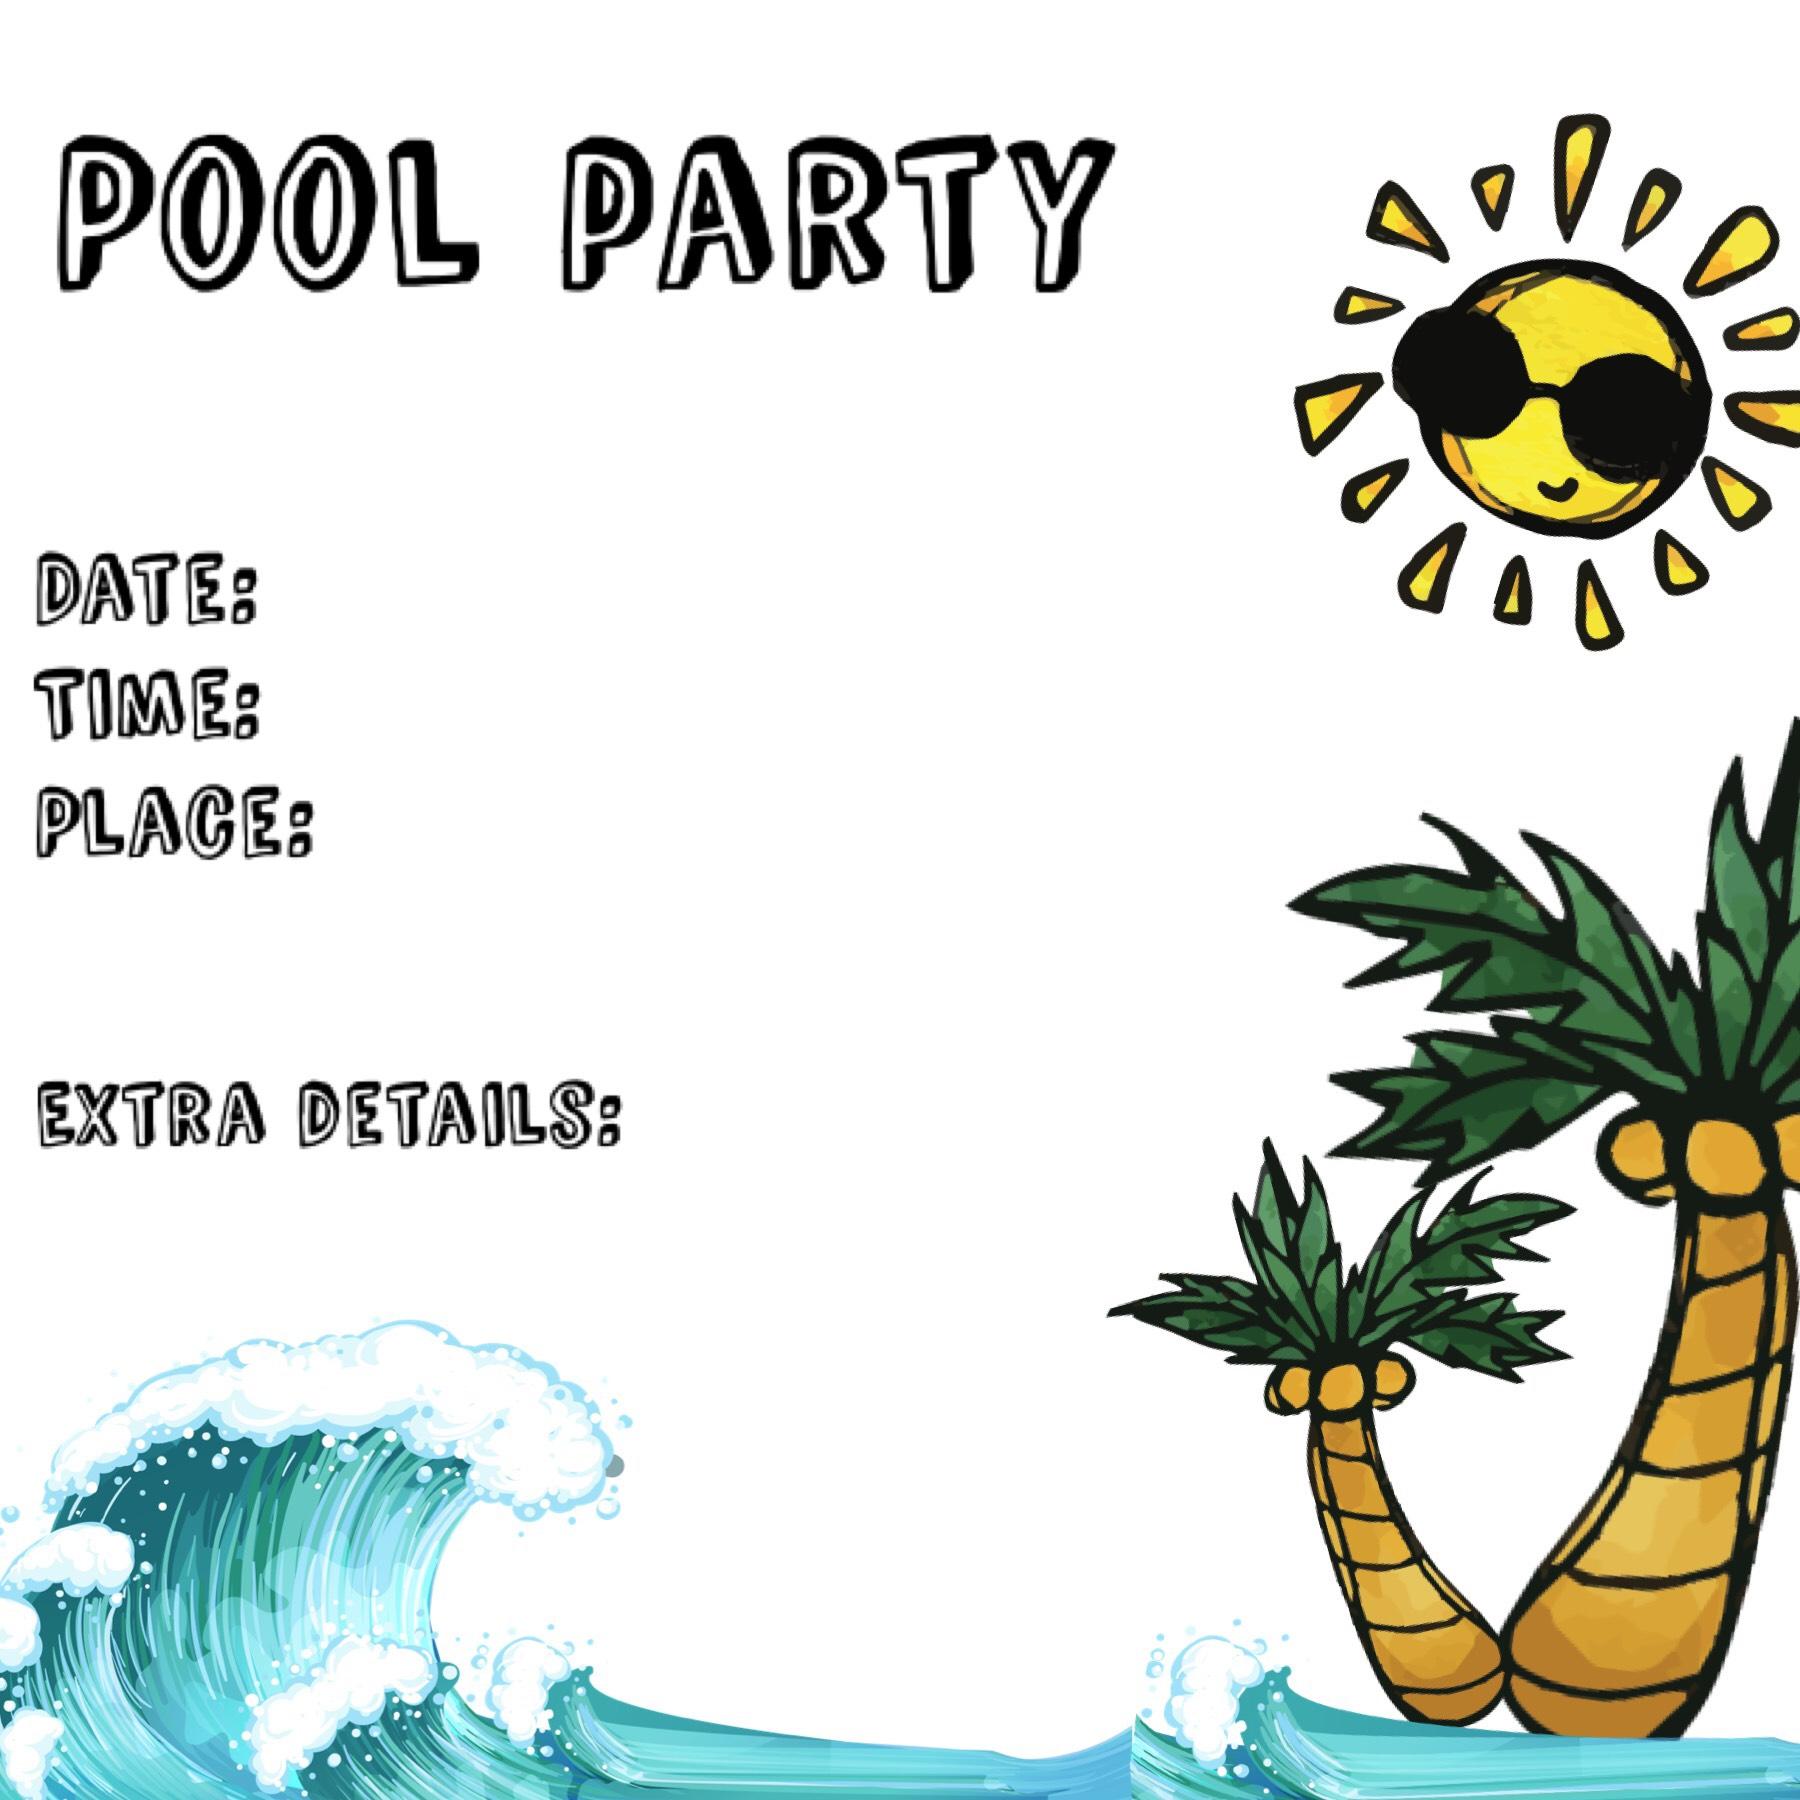 Pool party invite 